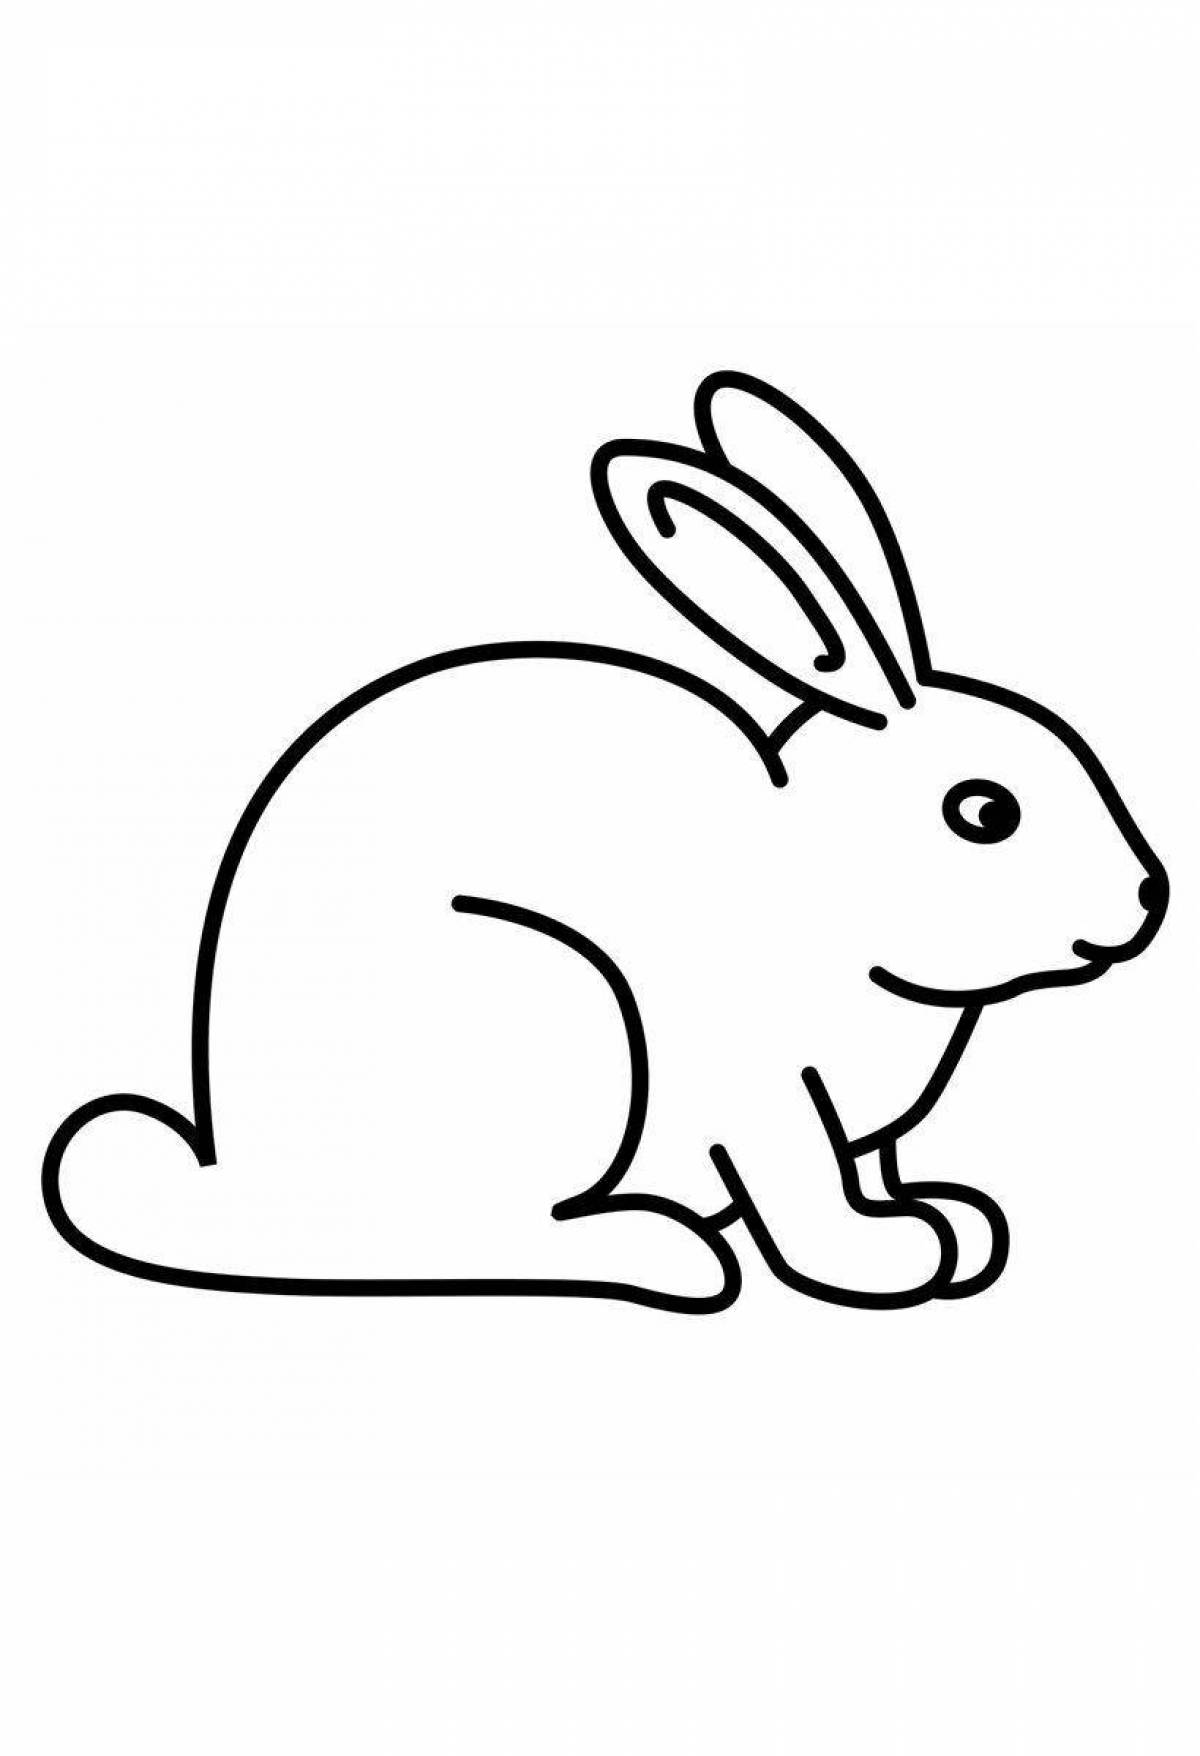 Adorable rabbit drawing coloring book